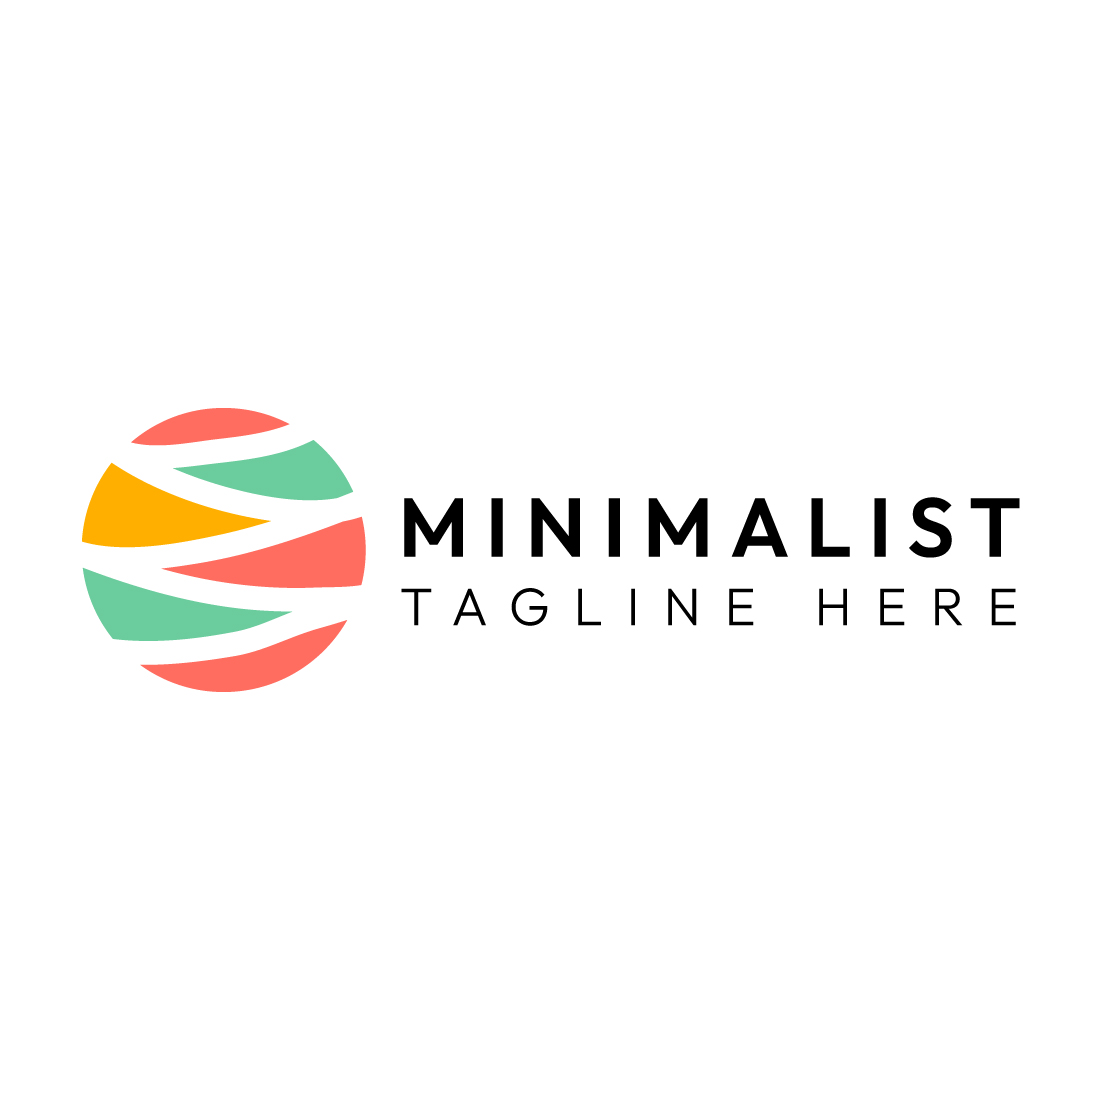 Minimalist Circle Logo Design Collection cover image.